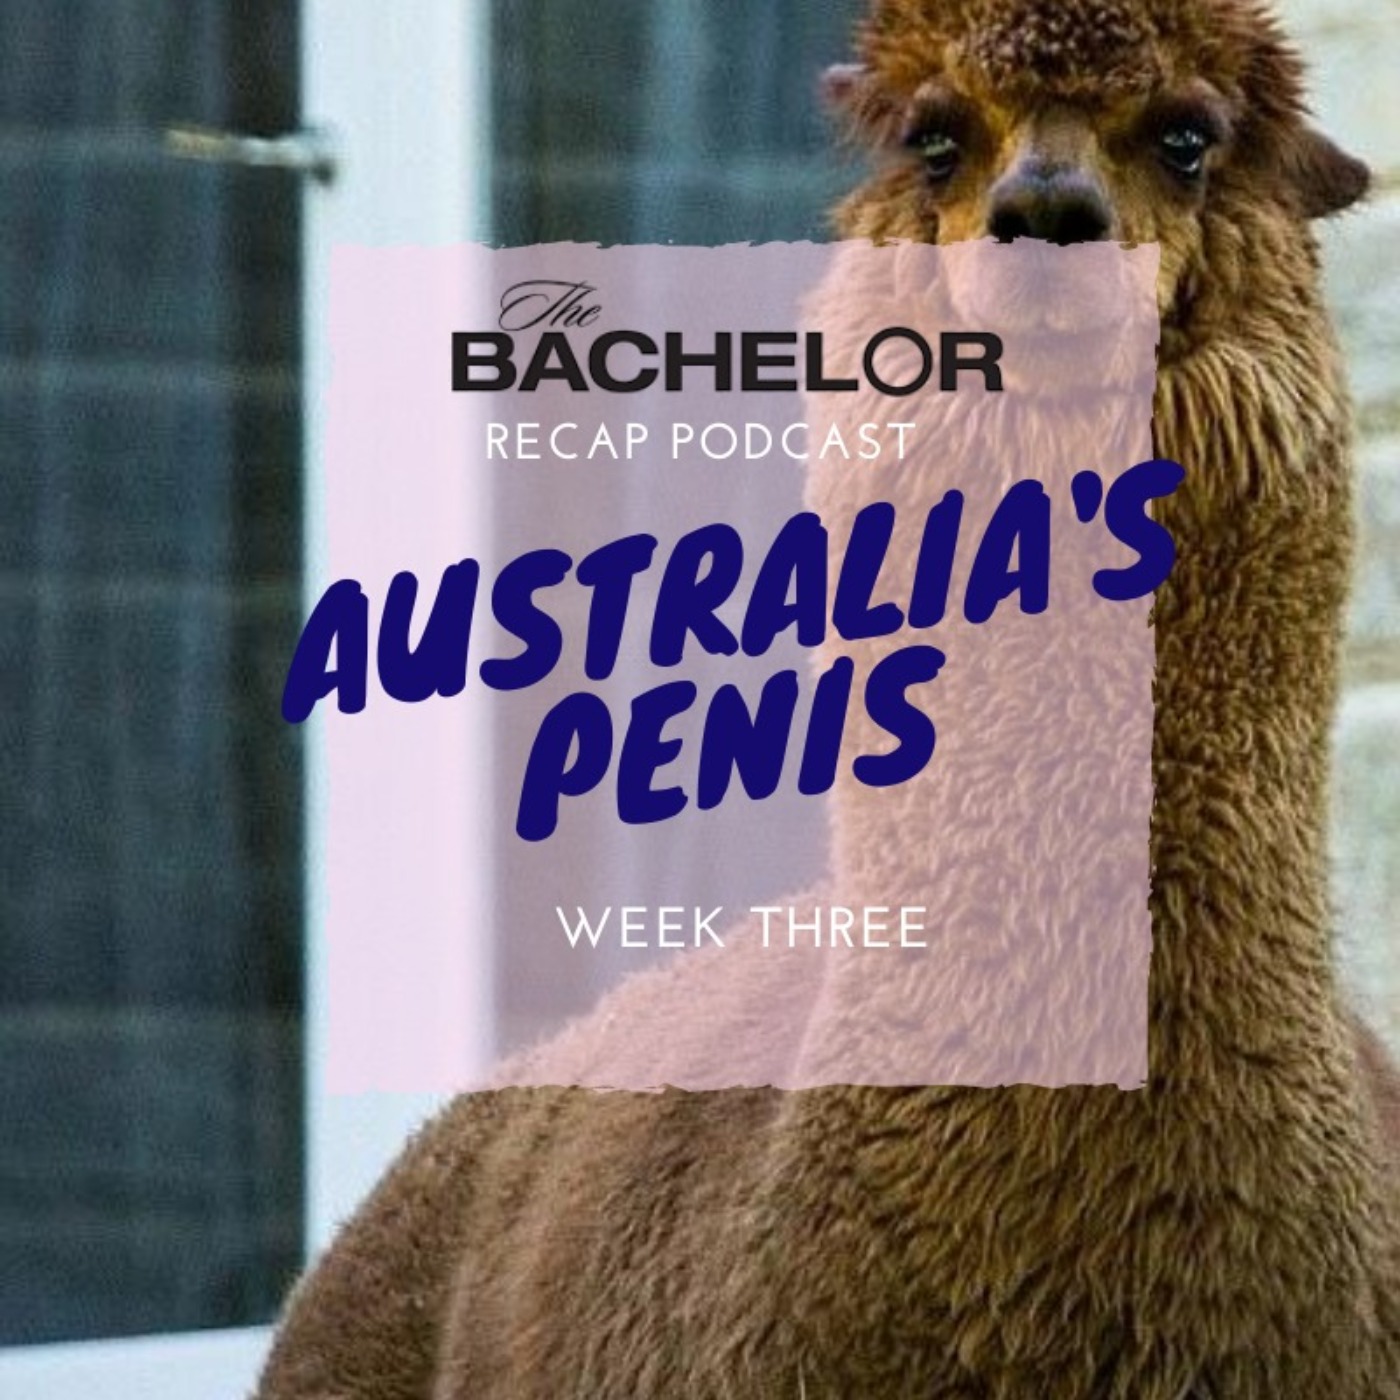 THE BACHELOR: Week 3 - Australia's Penis